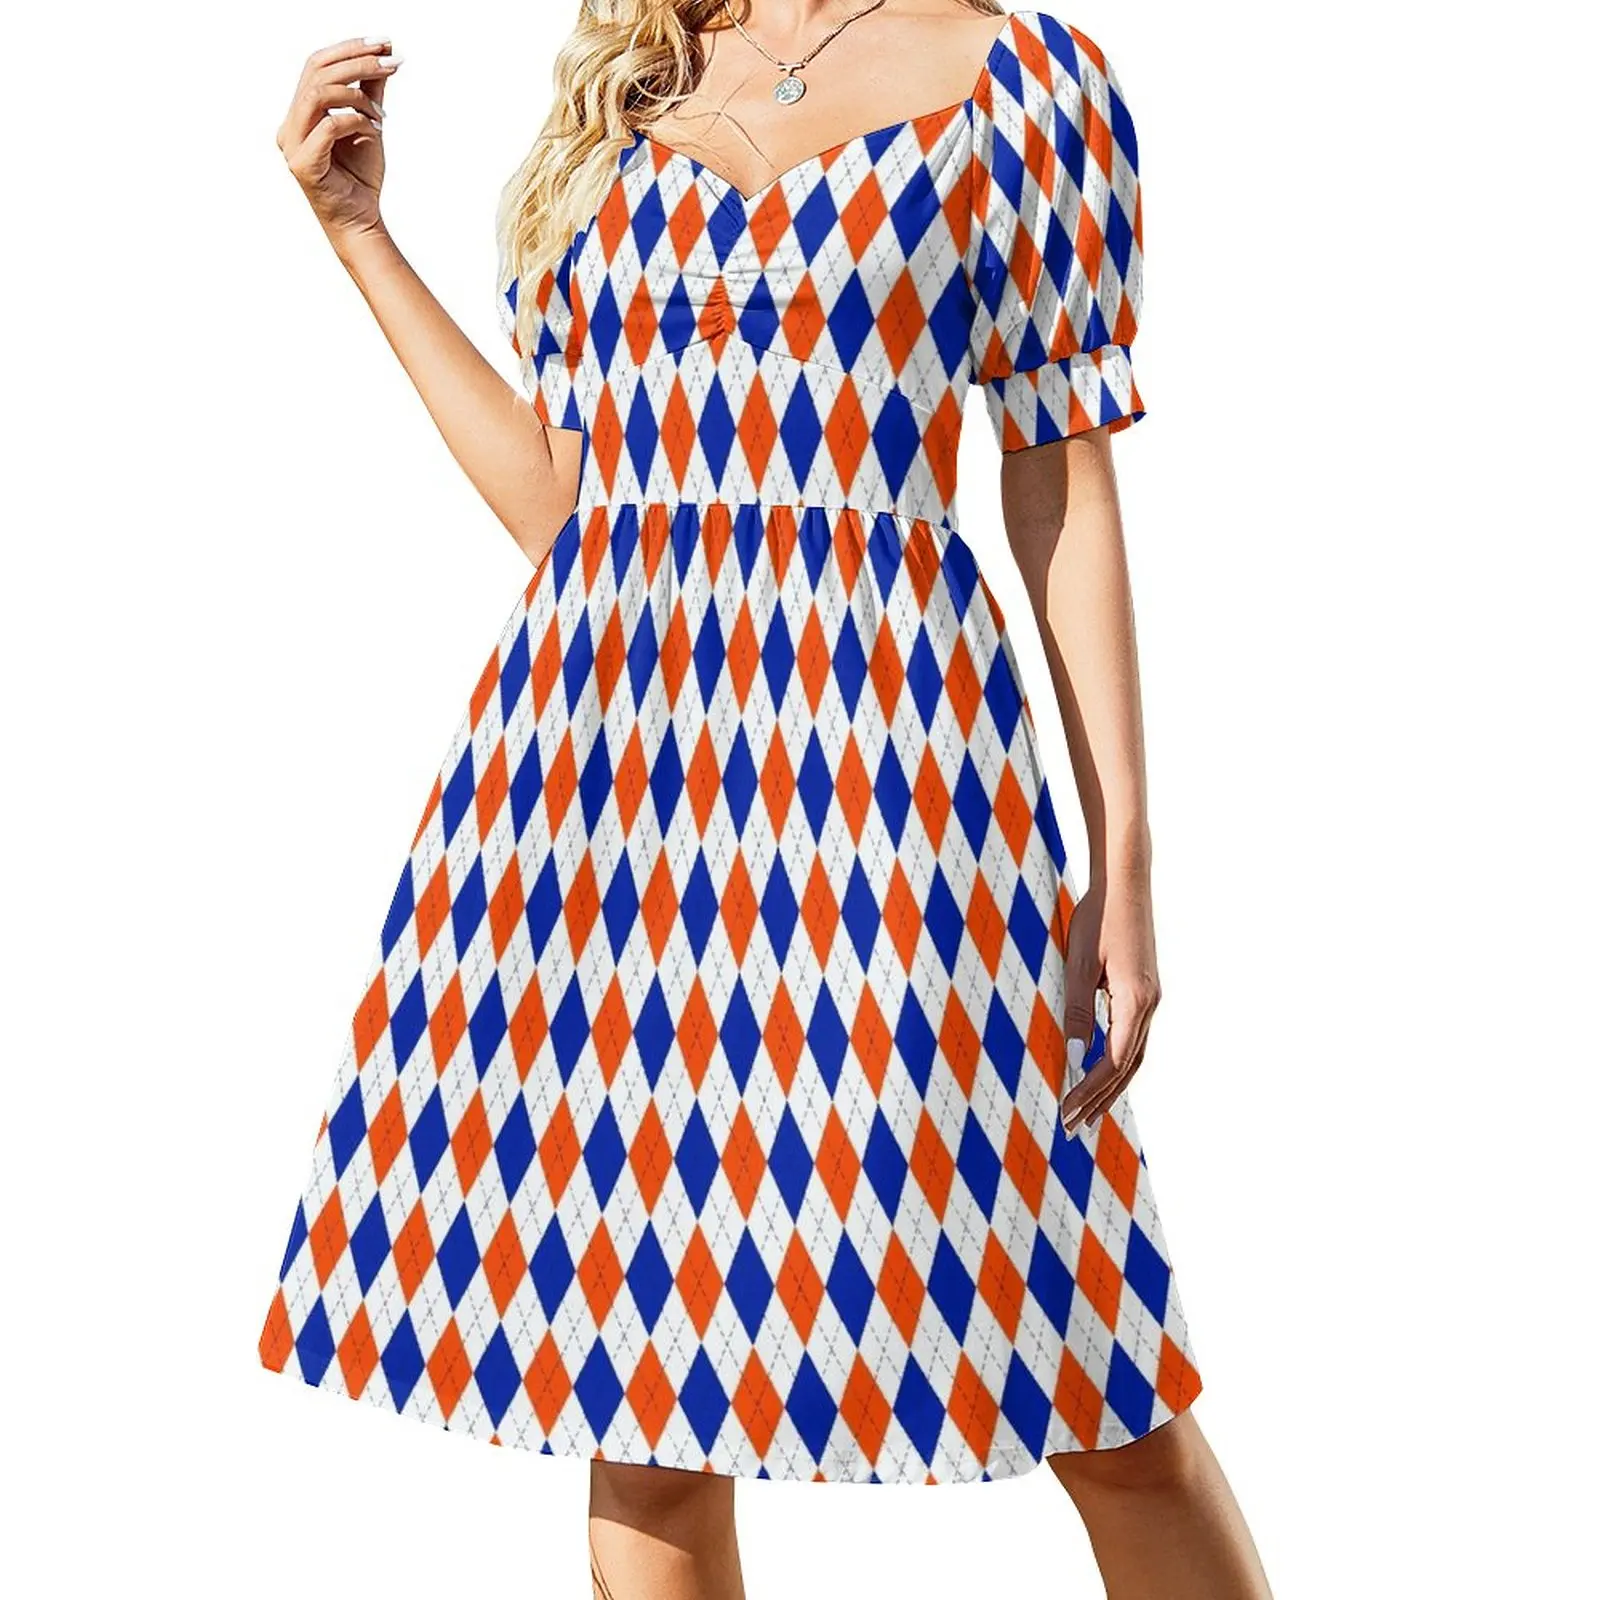 

Orange and Blue Traditional Argyle All Over Print Dress summer dress daily elegant women's dresses sale women's evening dresses